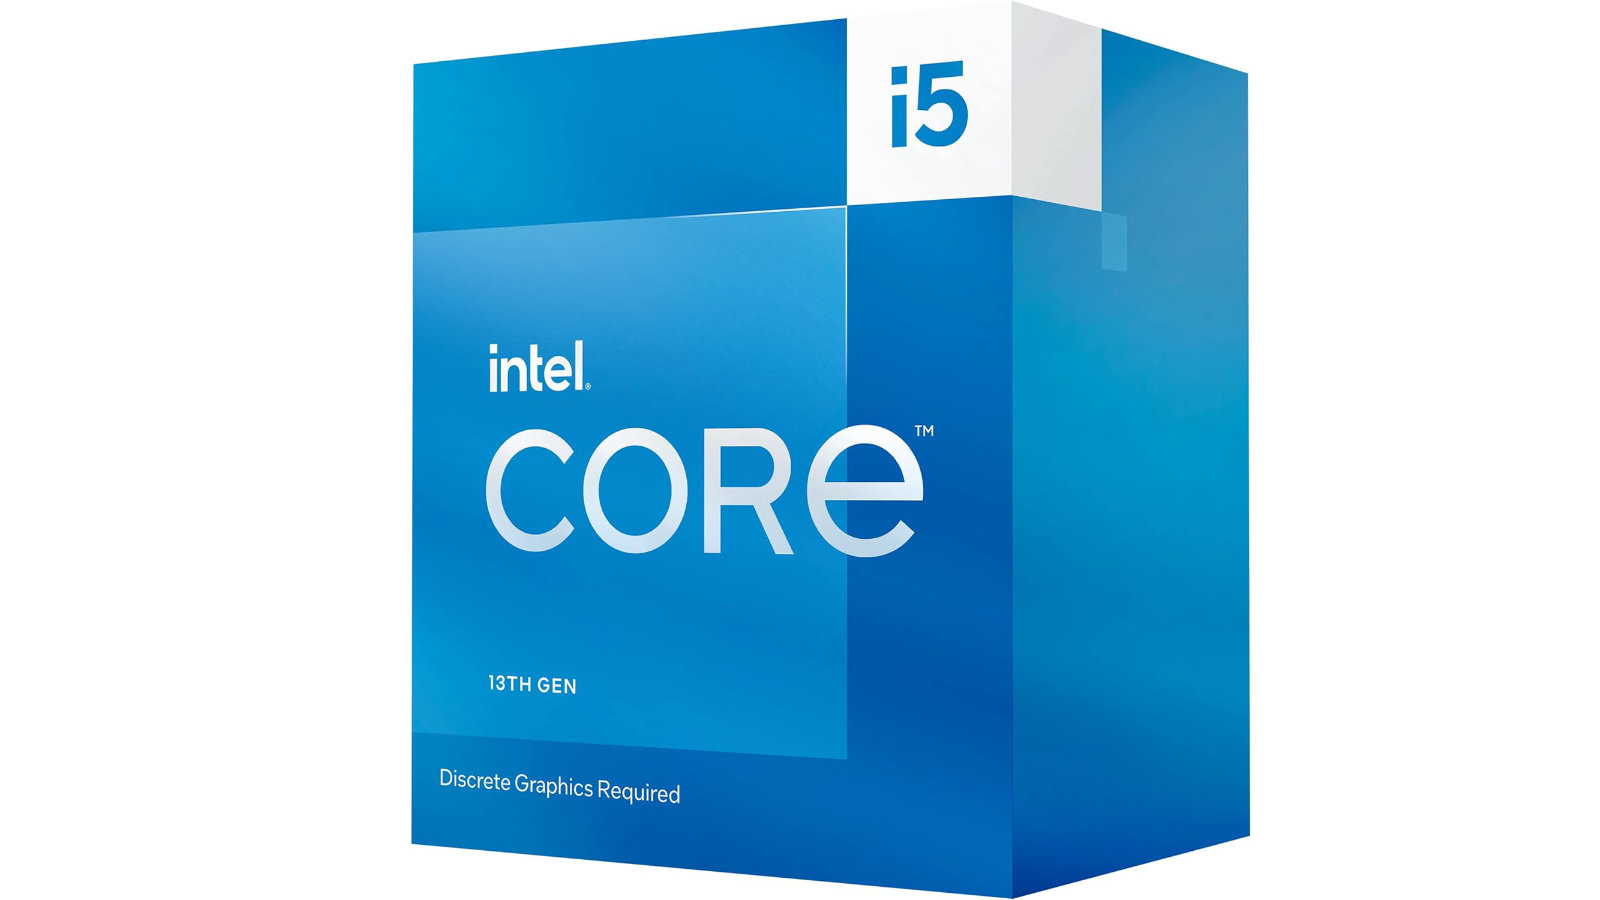 Intel Core i5-13600KF retail box against a white background.